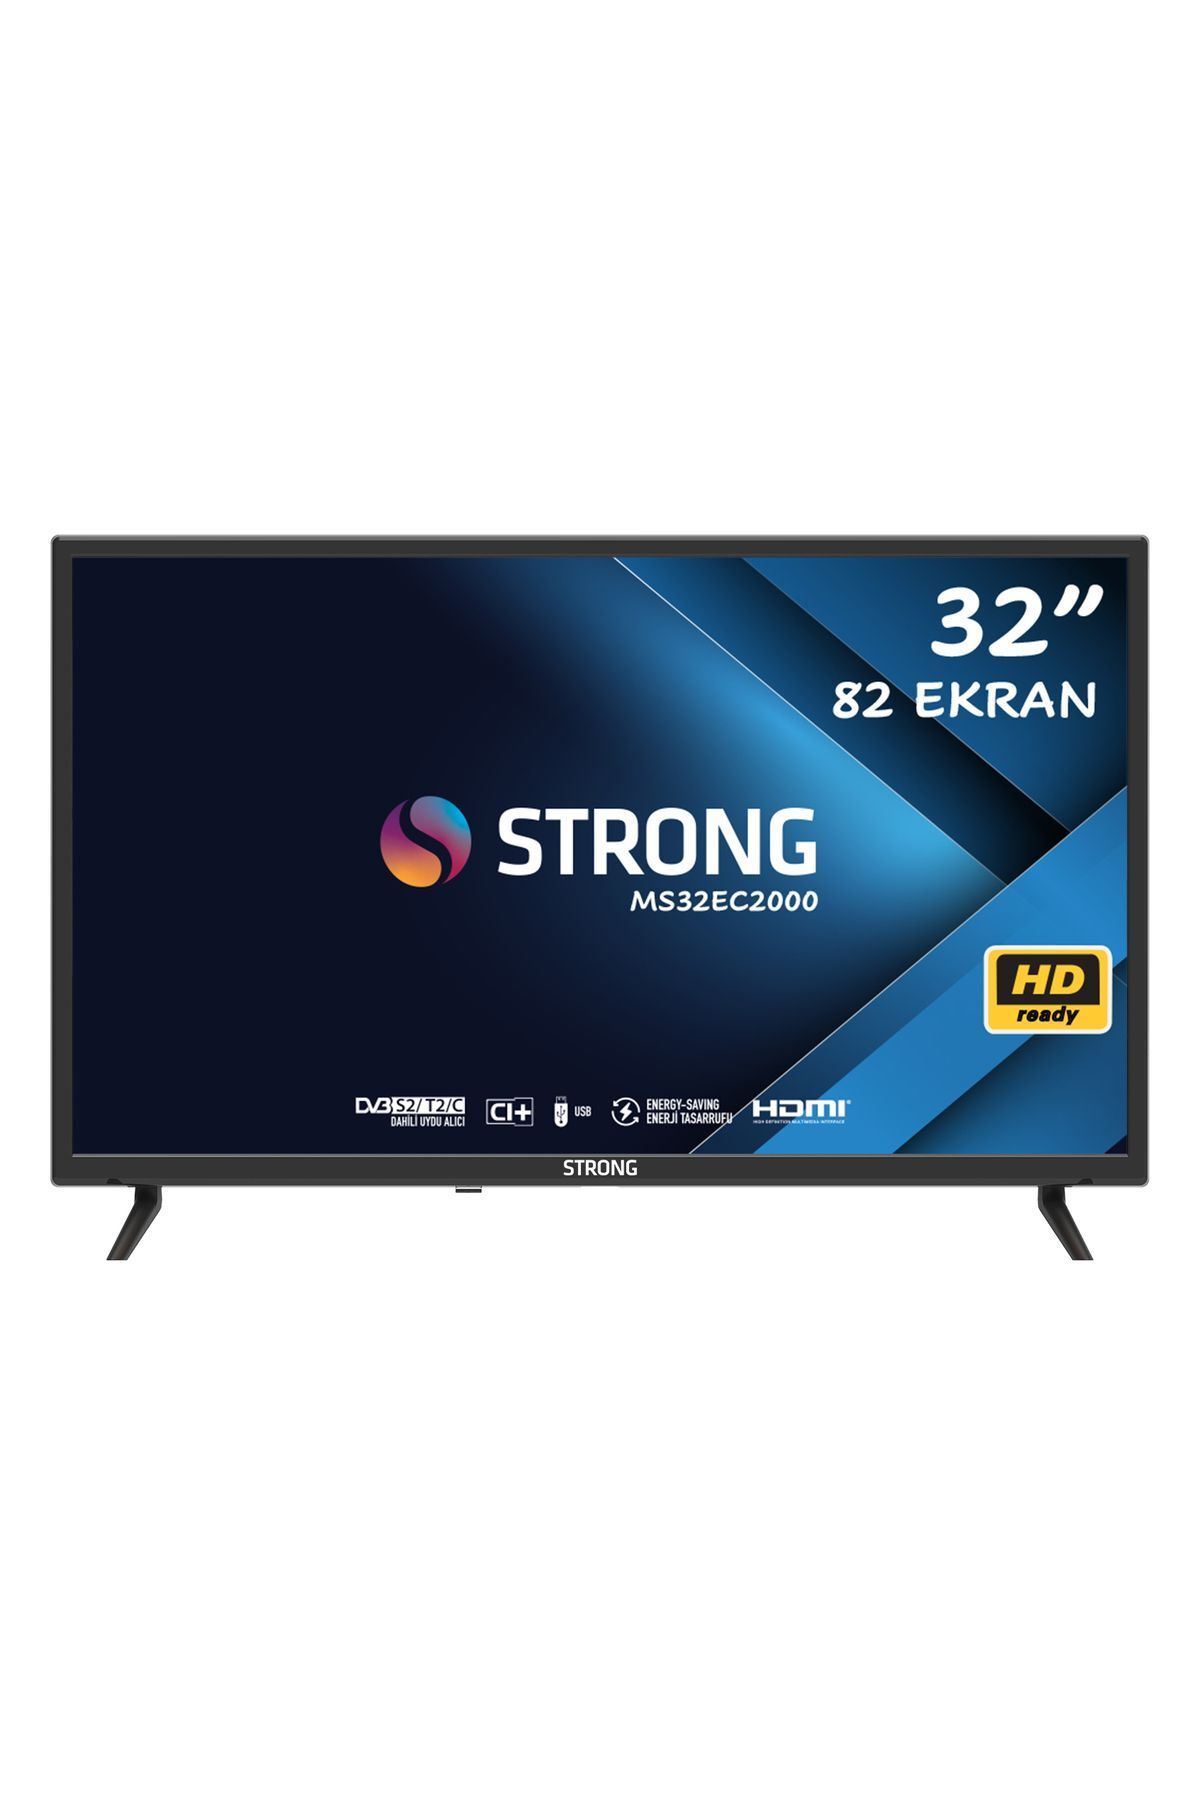 Strong MS32EC2000 32" 81 Ekran Uydu Alıcılı HD Ready LED TV